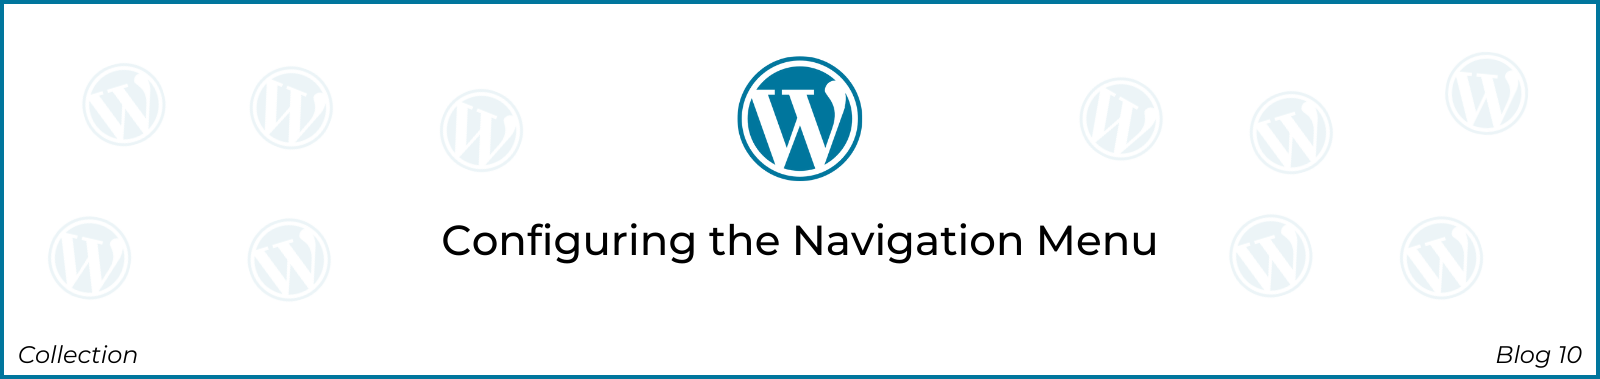 10 Wordpress Configuring The Navigation Menu